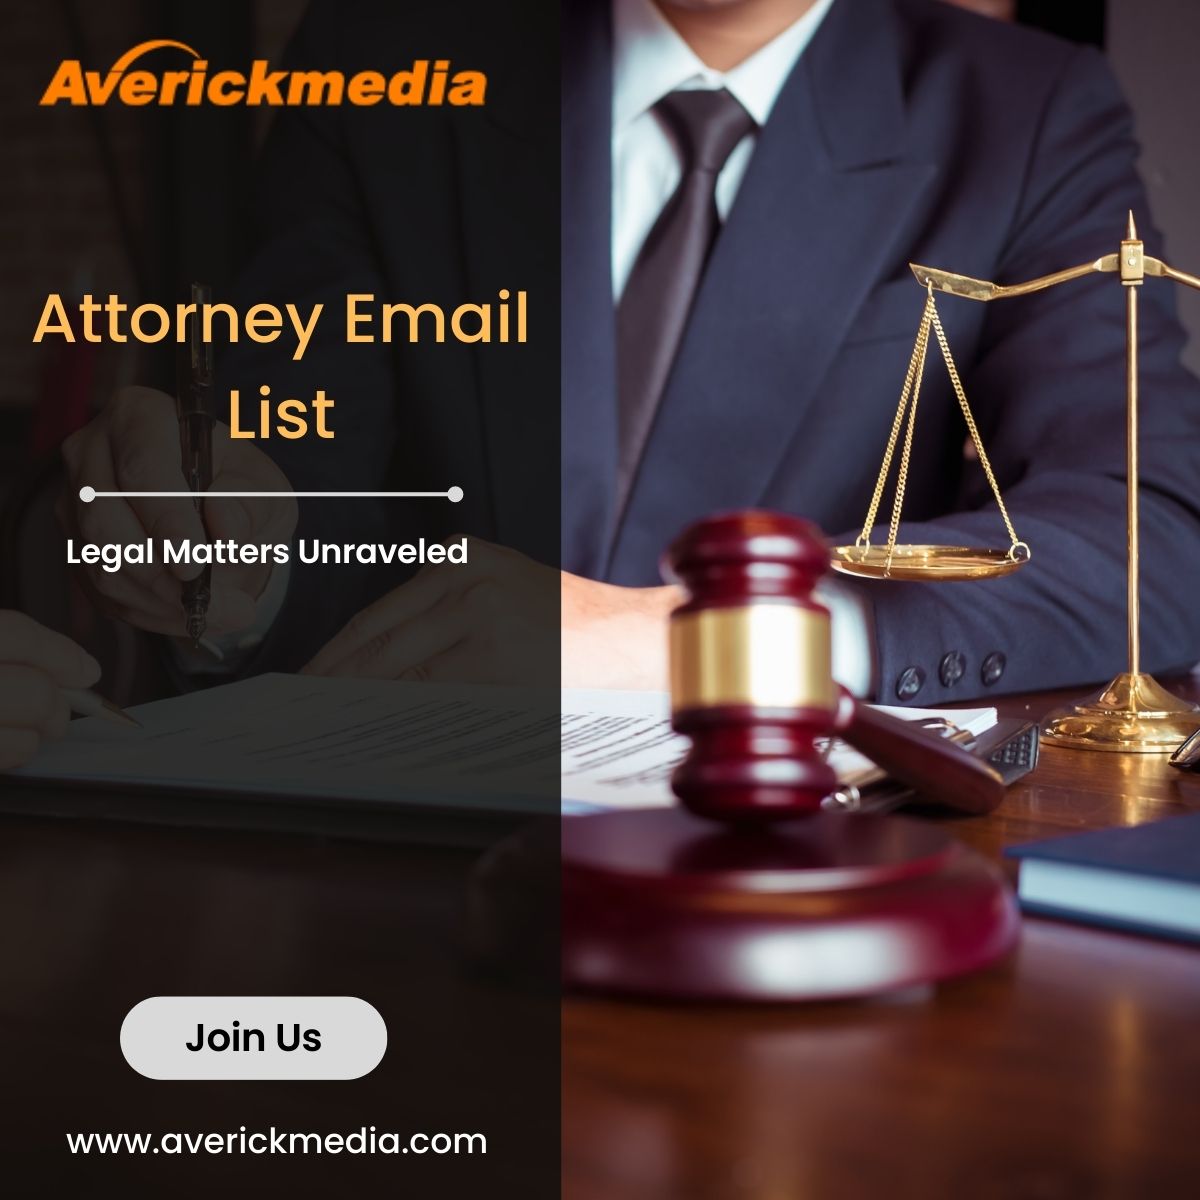 AP =
Averickmedia

Attorney Email
NE

 

Legal Matters Unraveled

 

www.averickmedia.com